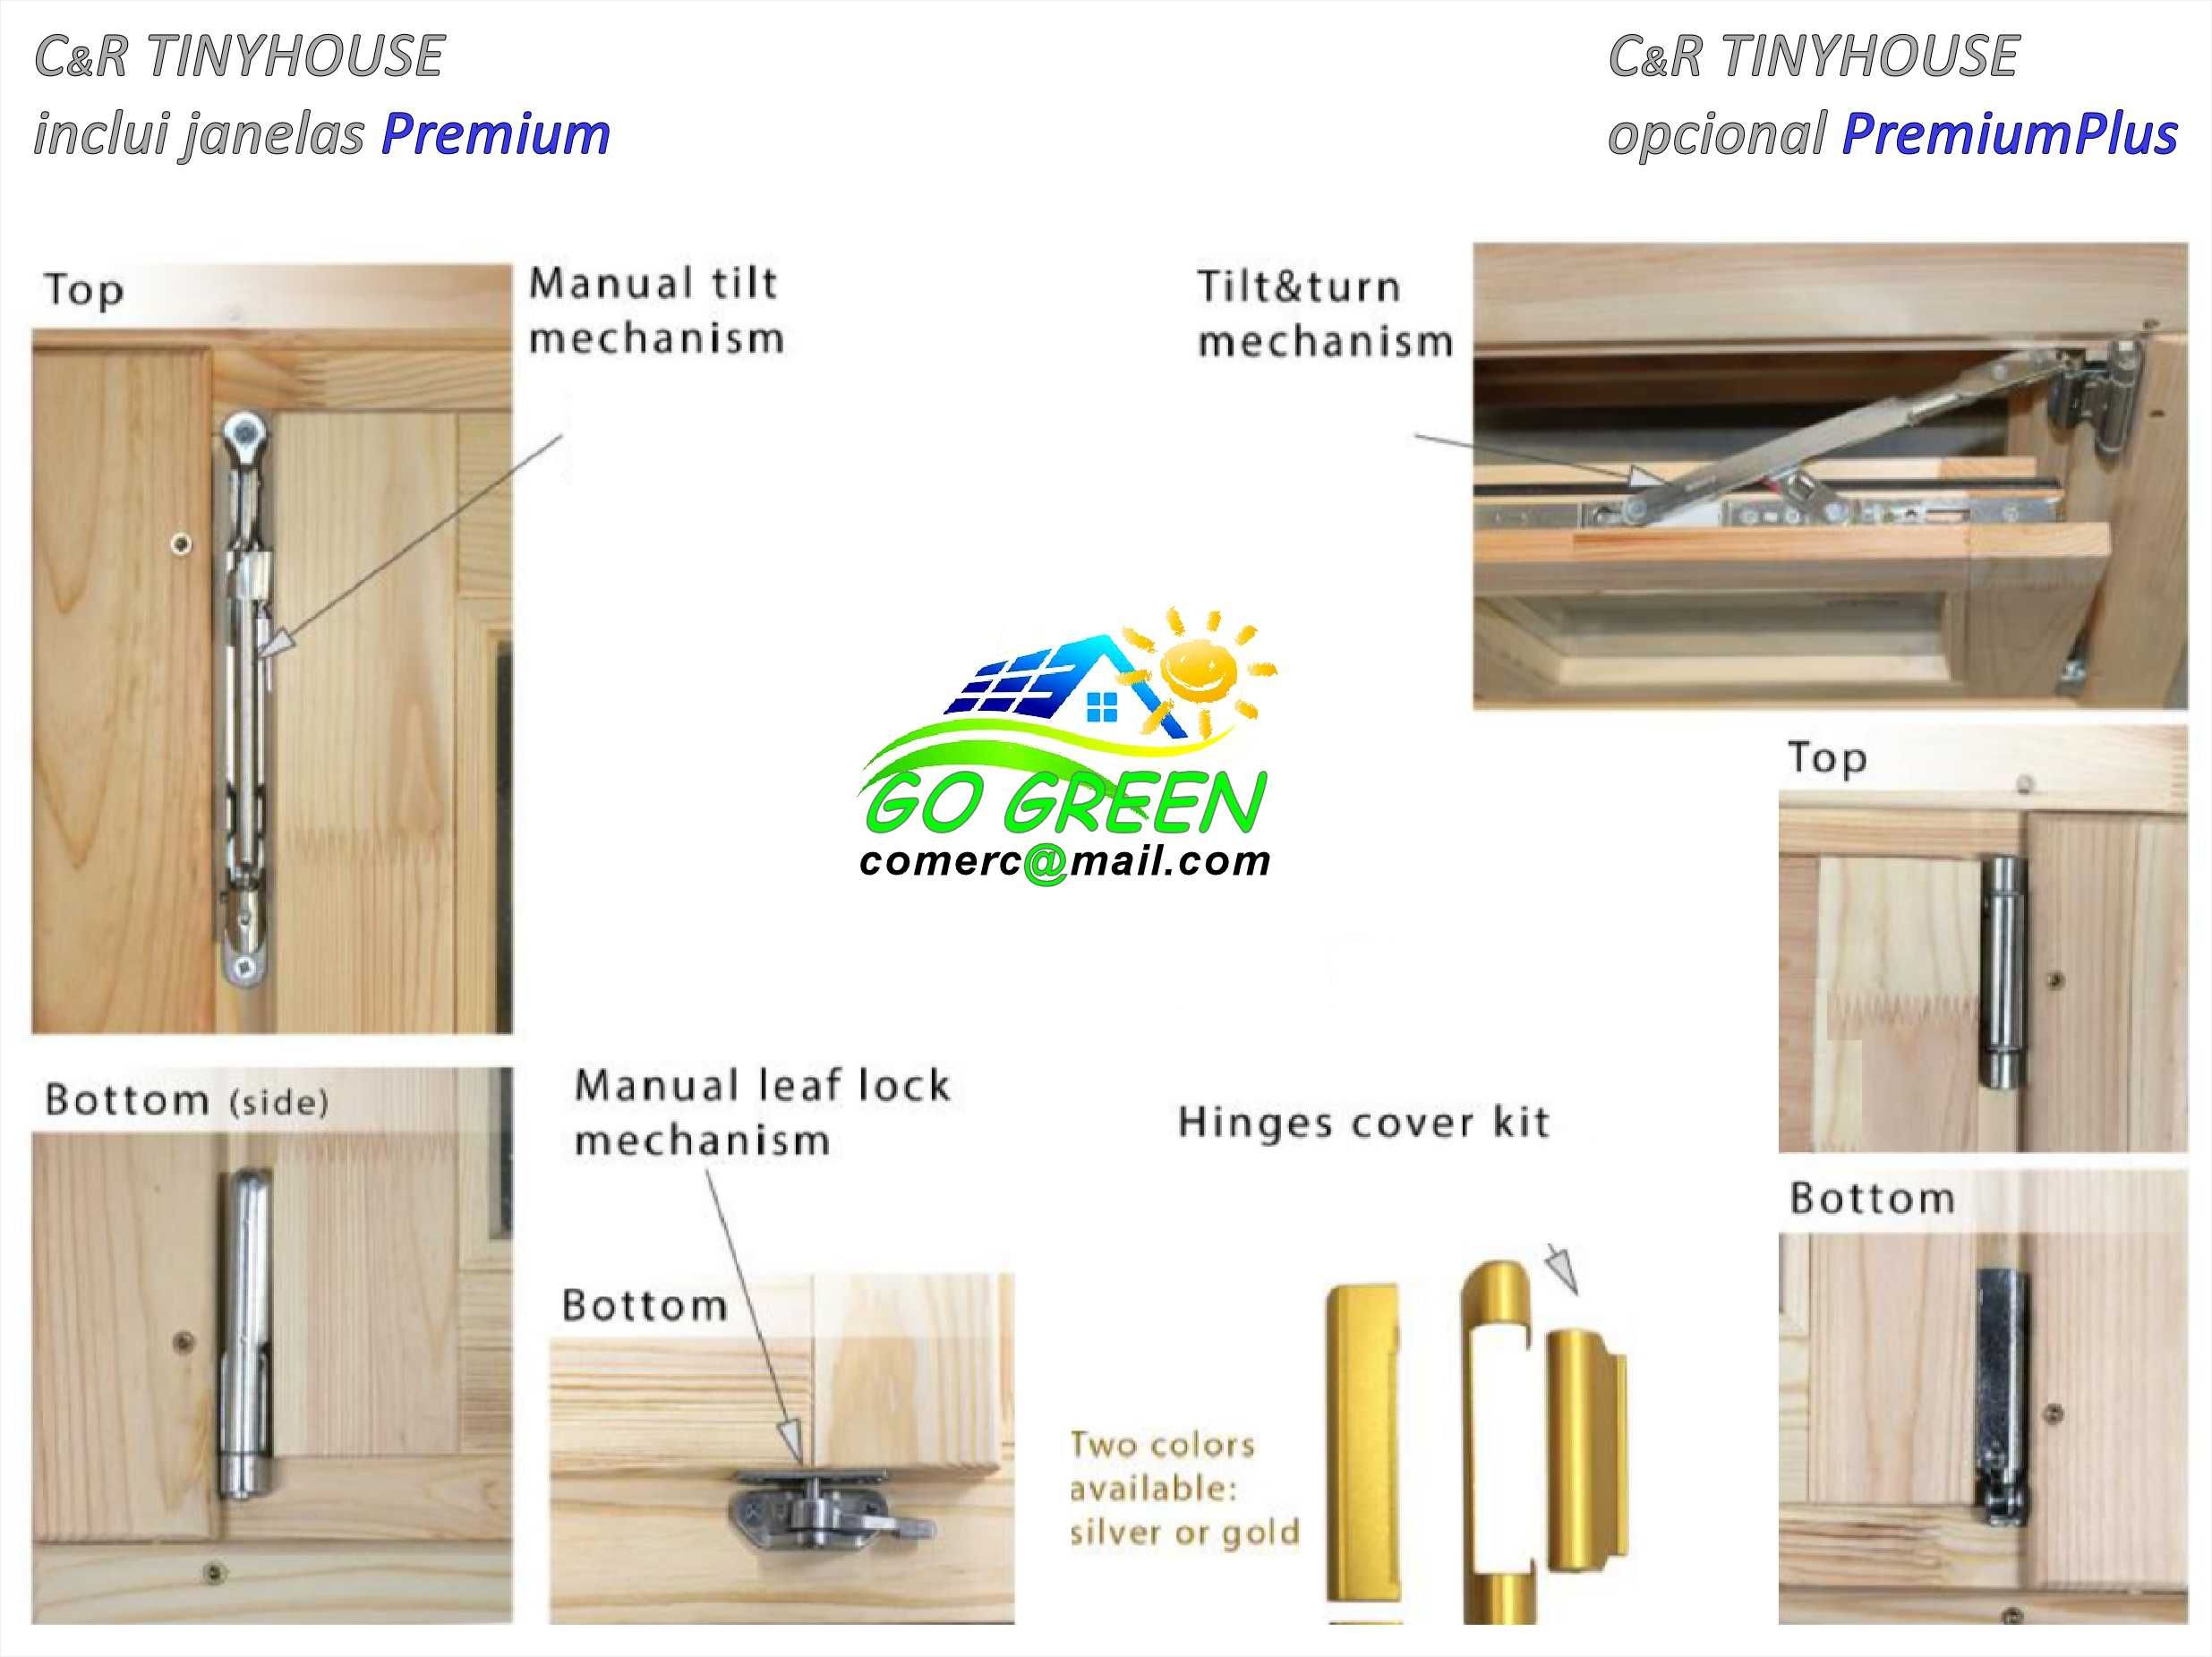 TINY HOUSE C&R Modelo 1 T1 30m² Mezanino PV Solar KIT  Casa de madeira